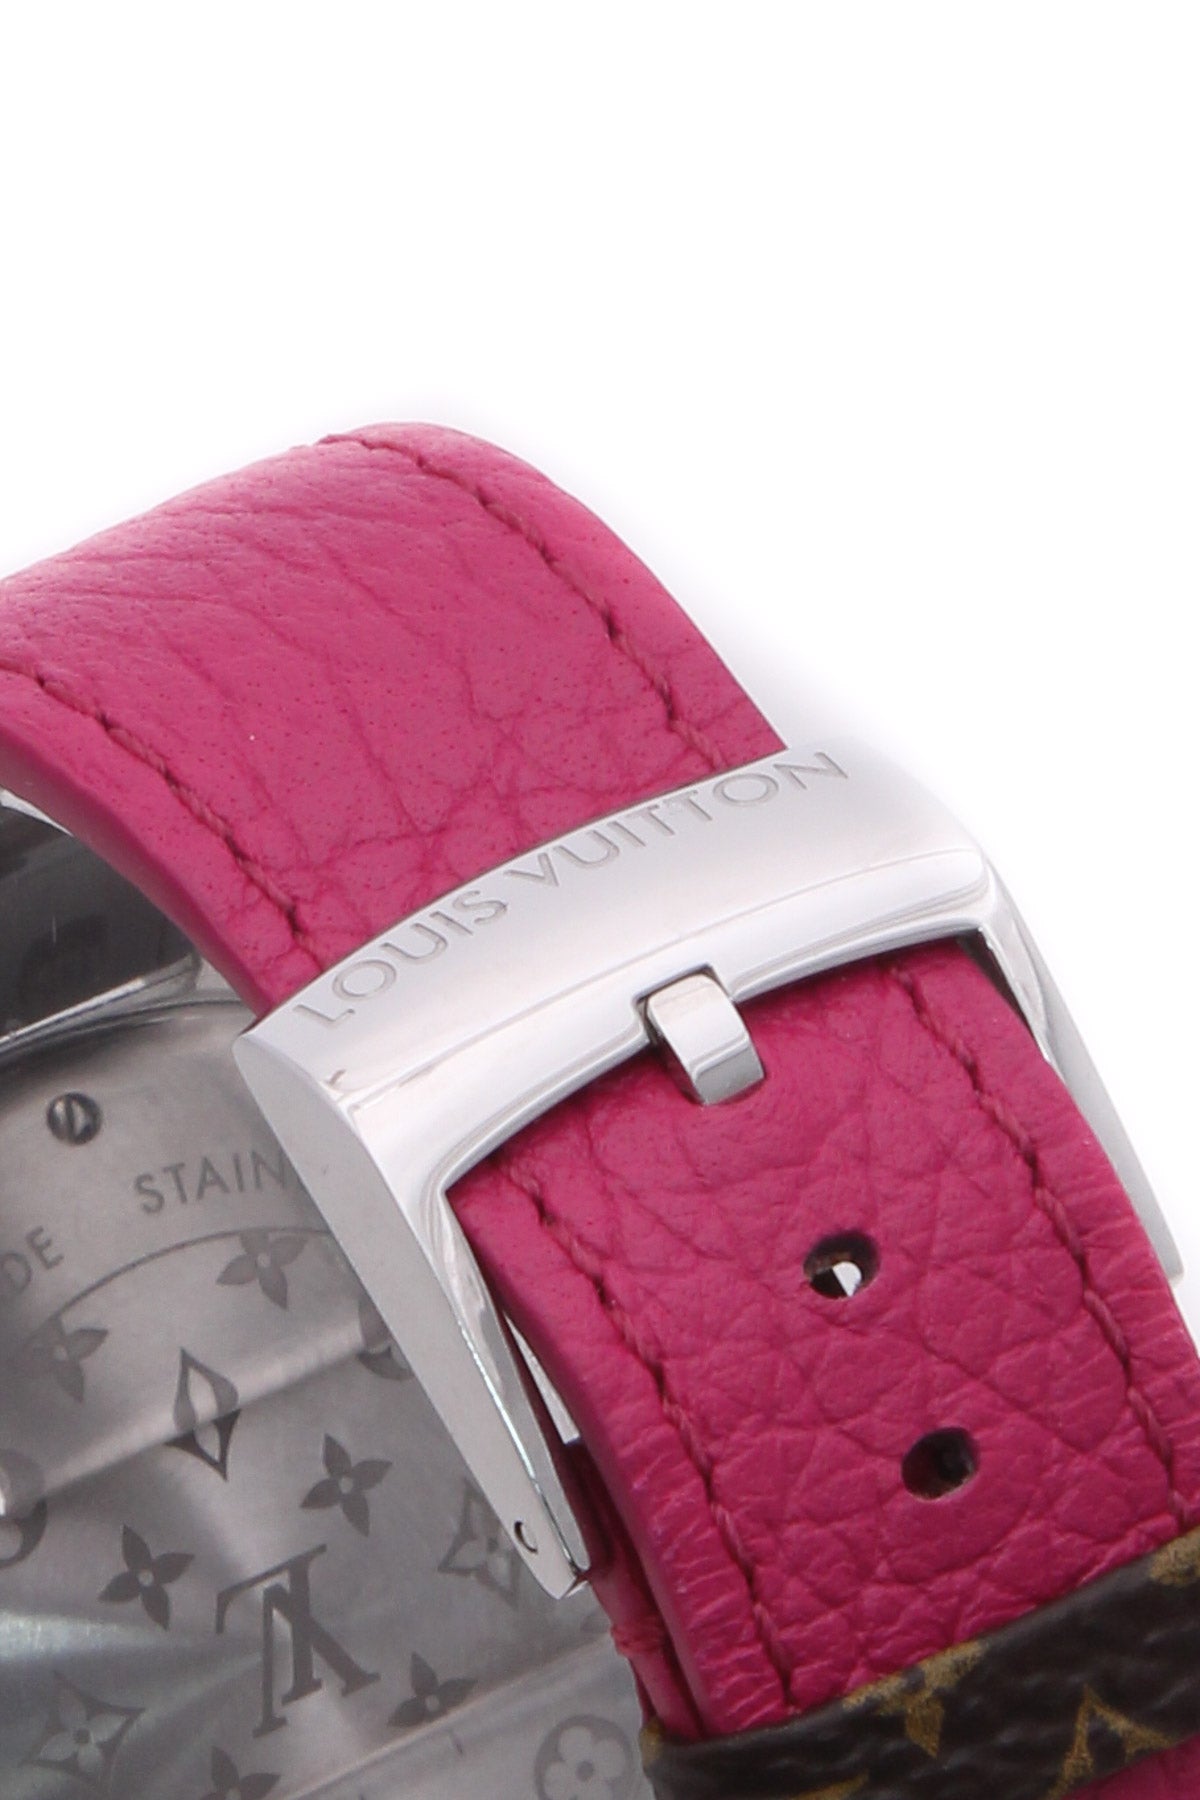 Authentic LOUIS VUITTON Tambour Pink with Diamonds Quartz Leather Ladies  Watch